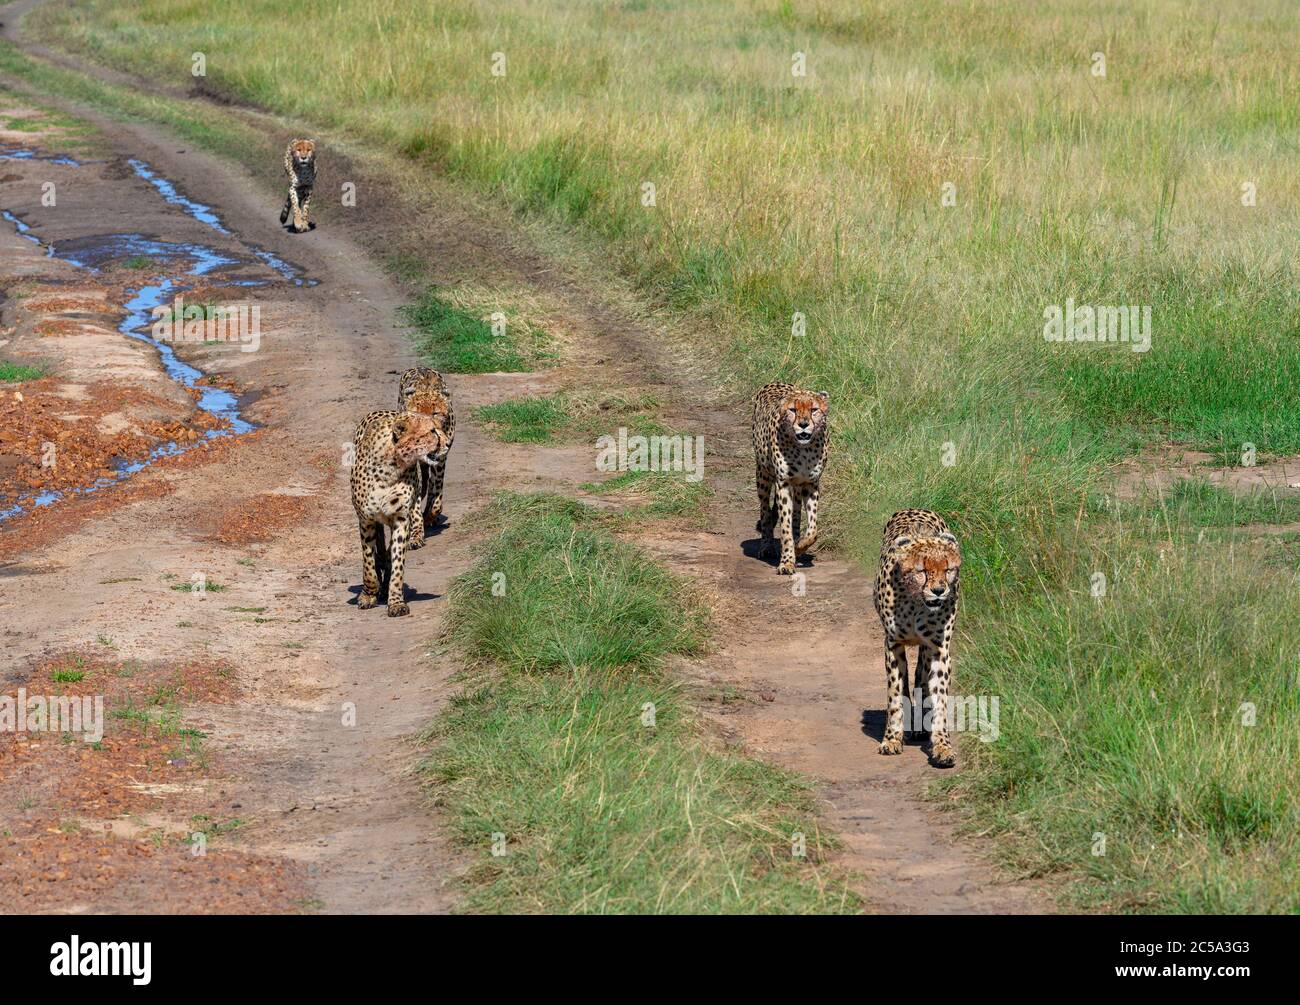 Cheetah (Acinonyx jubatus). Cheetahs walking along a dirt road in the Masai Mara National Reserve, Kenya, Africa Stock Photo